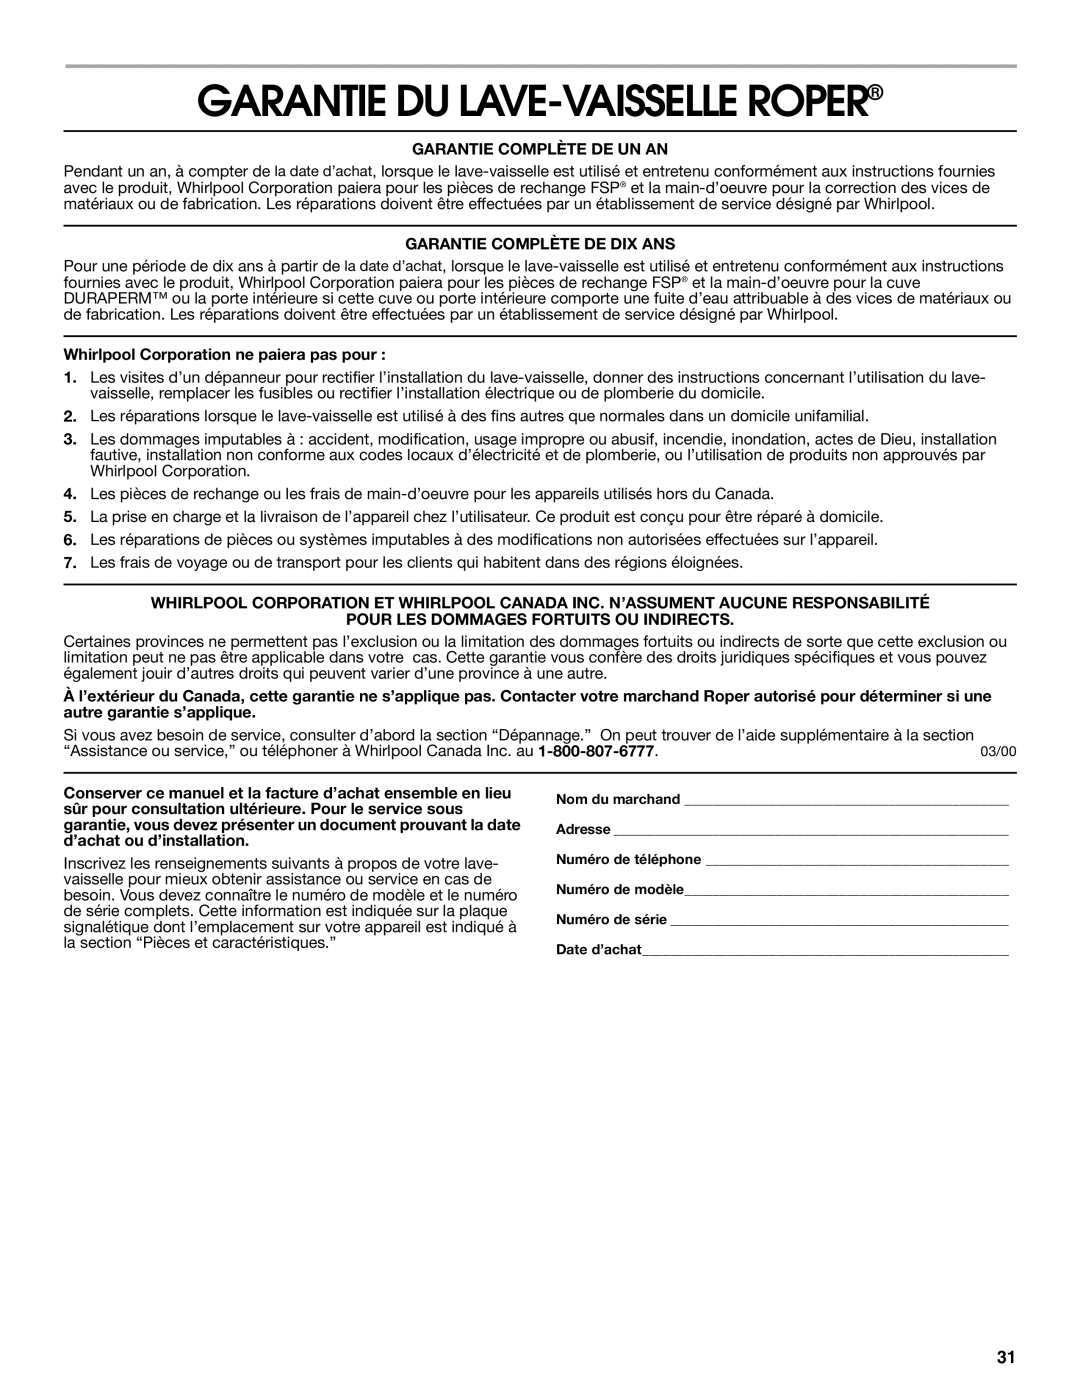 Roper rud4000 manual Garantie Du Lave-Vaisselleroper, Garantie Complète De Un An, Garantie Complète De Dix Ans 